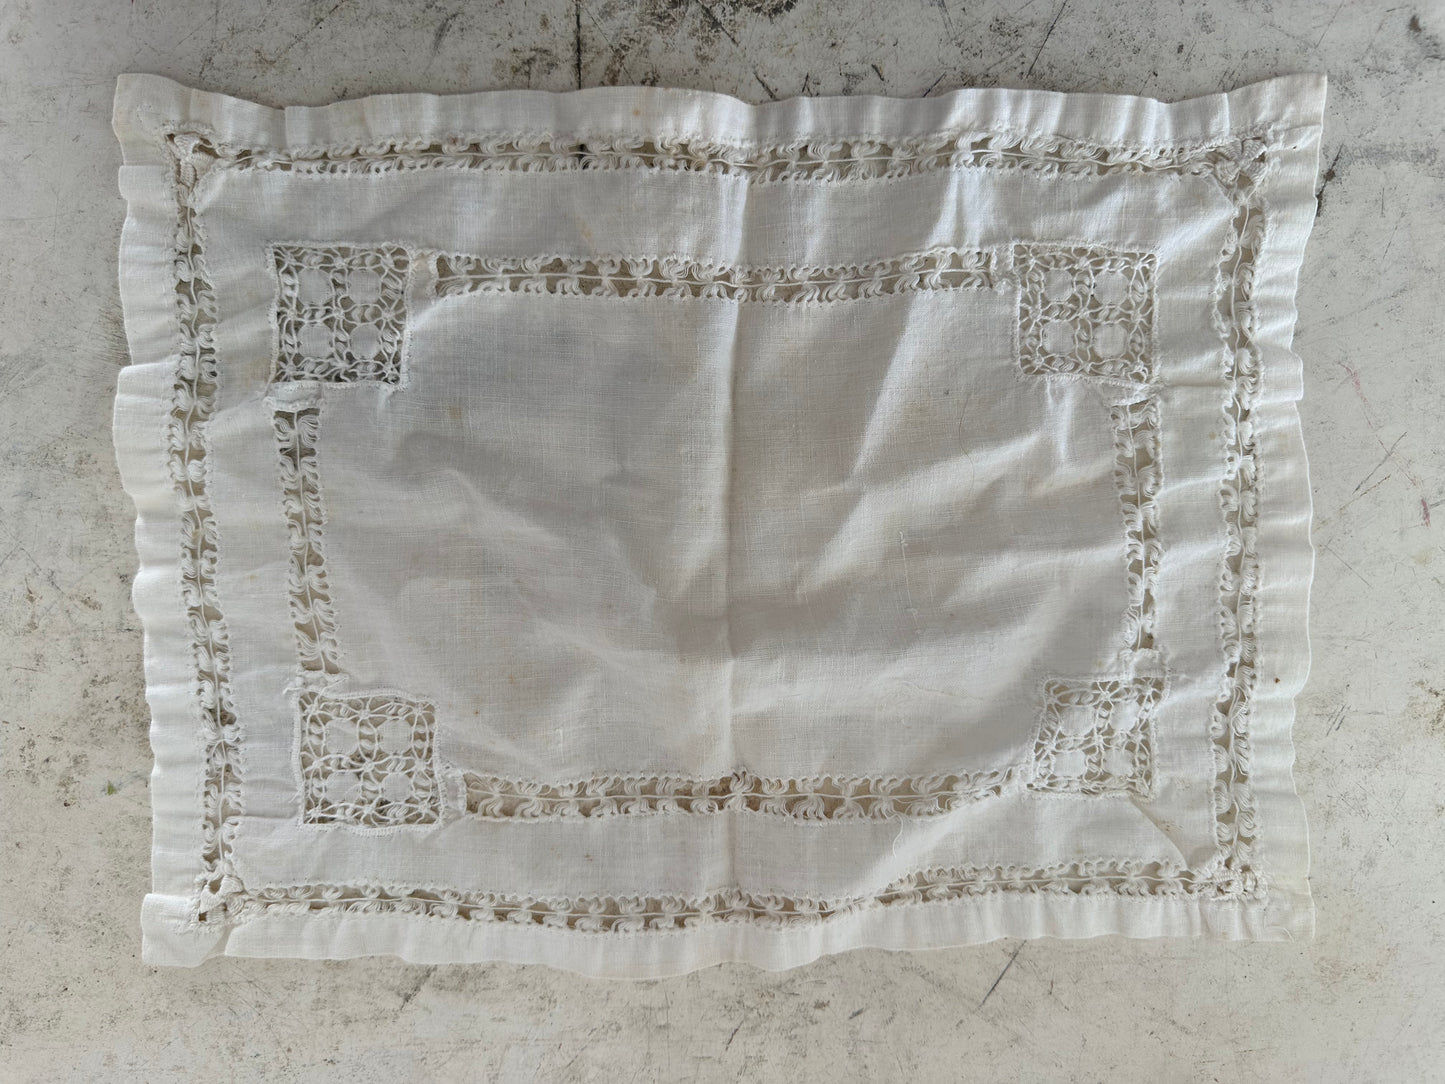 Vintage Linens - sold individually pulled at random